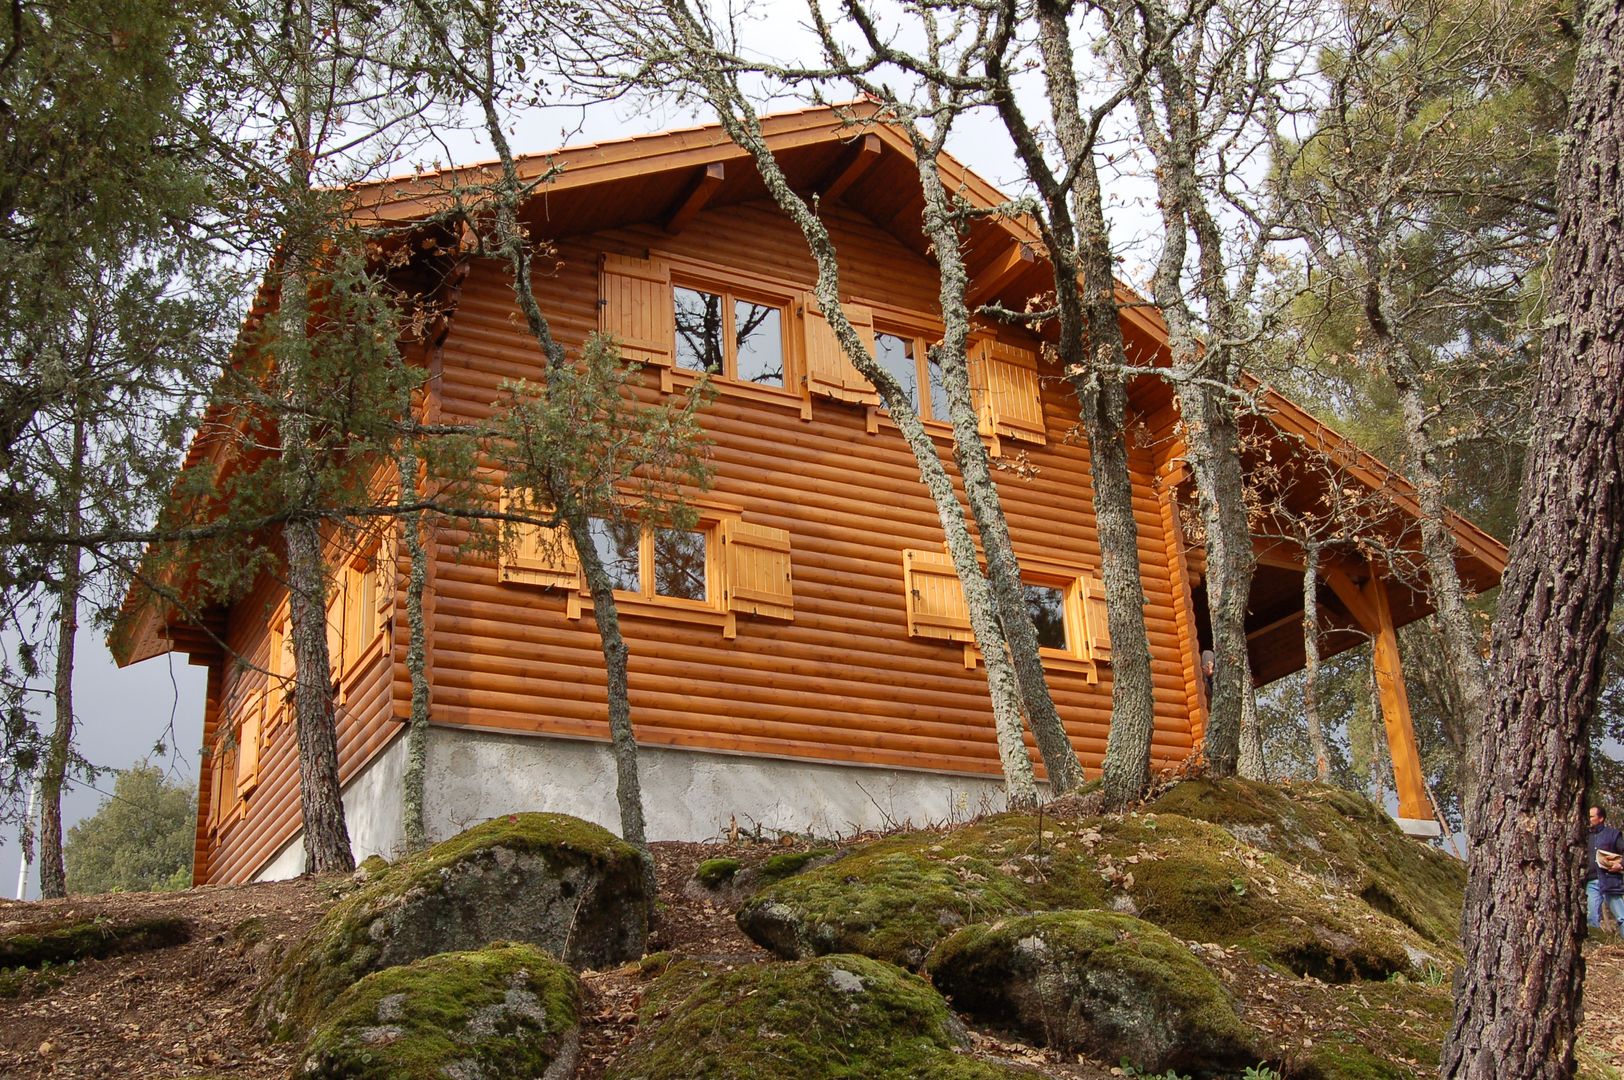 RUSTICASA | 100 projetos | Portugal + Espanha, RUSTICASA RUSTICASA Nhà gỗ Than củi Multicolored